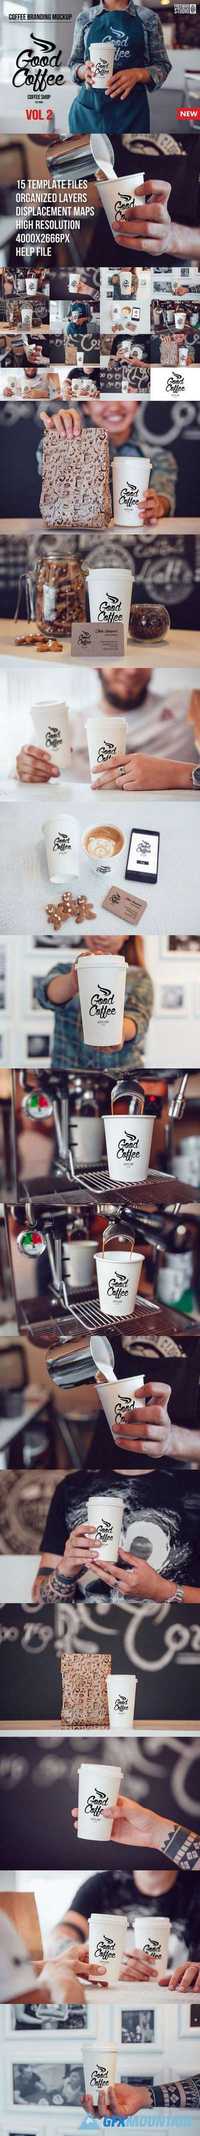 Coffee Branding Mock-up Vol 2 961932